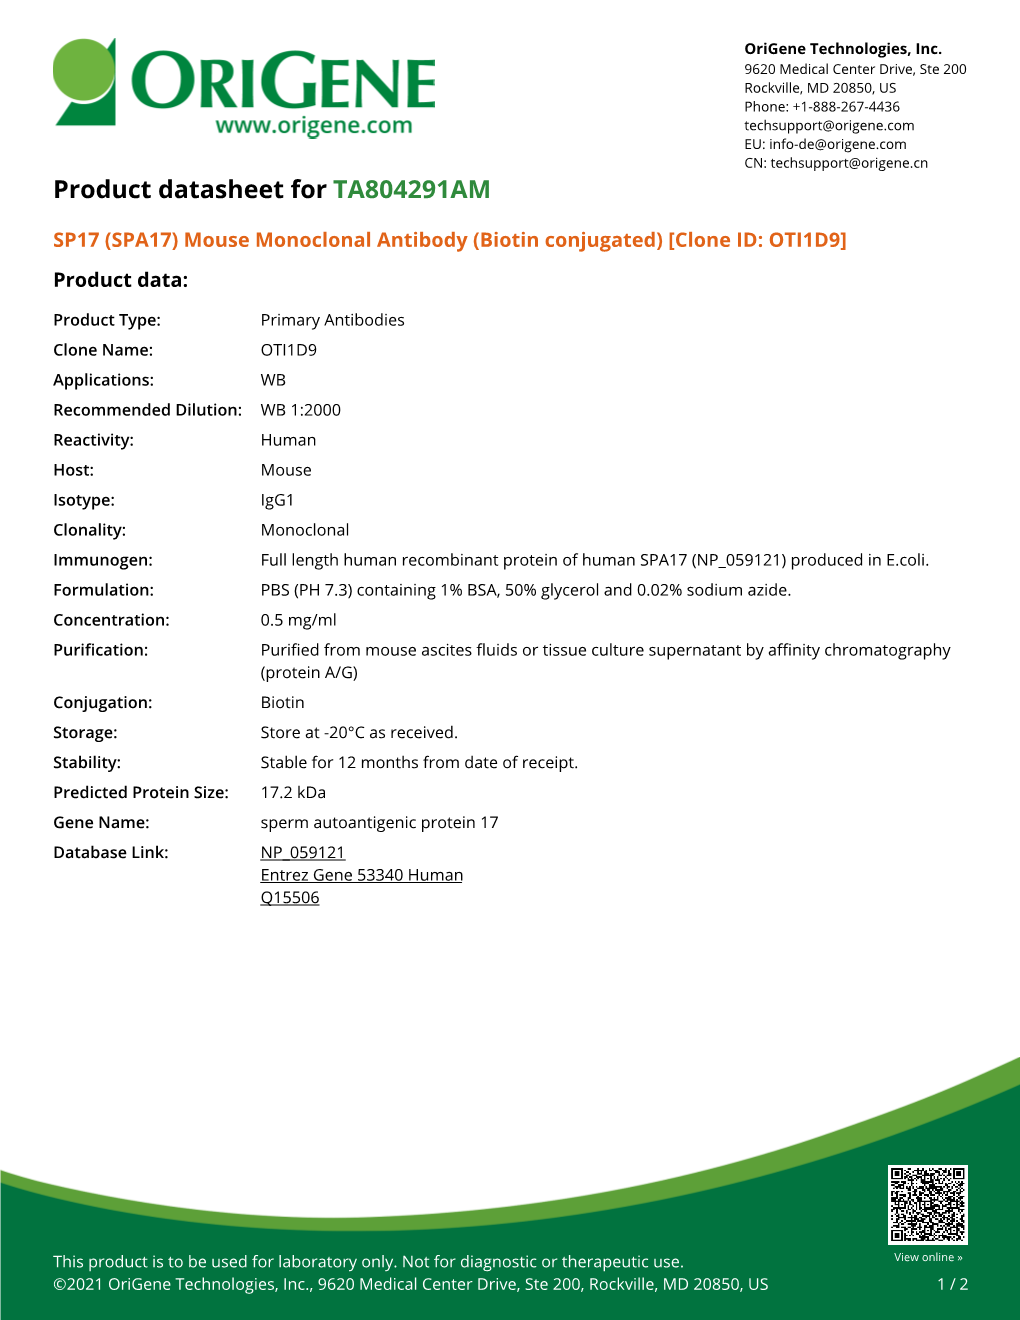 SP17 (SPA17) Mouse Monoclonal Antibody (Biotin Conjugated) [Clone ID: OTI1D9] Product Data